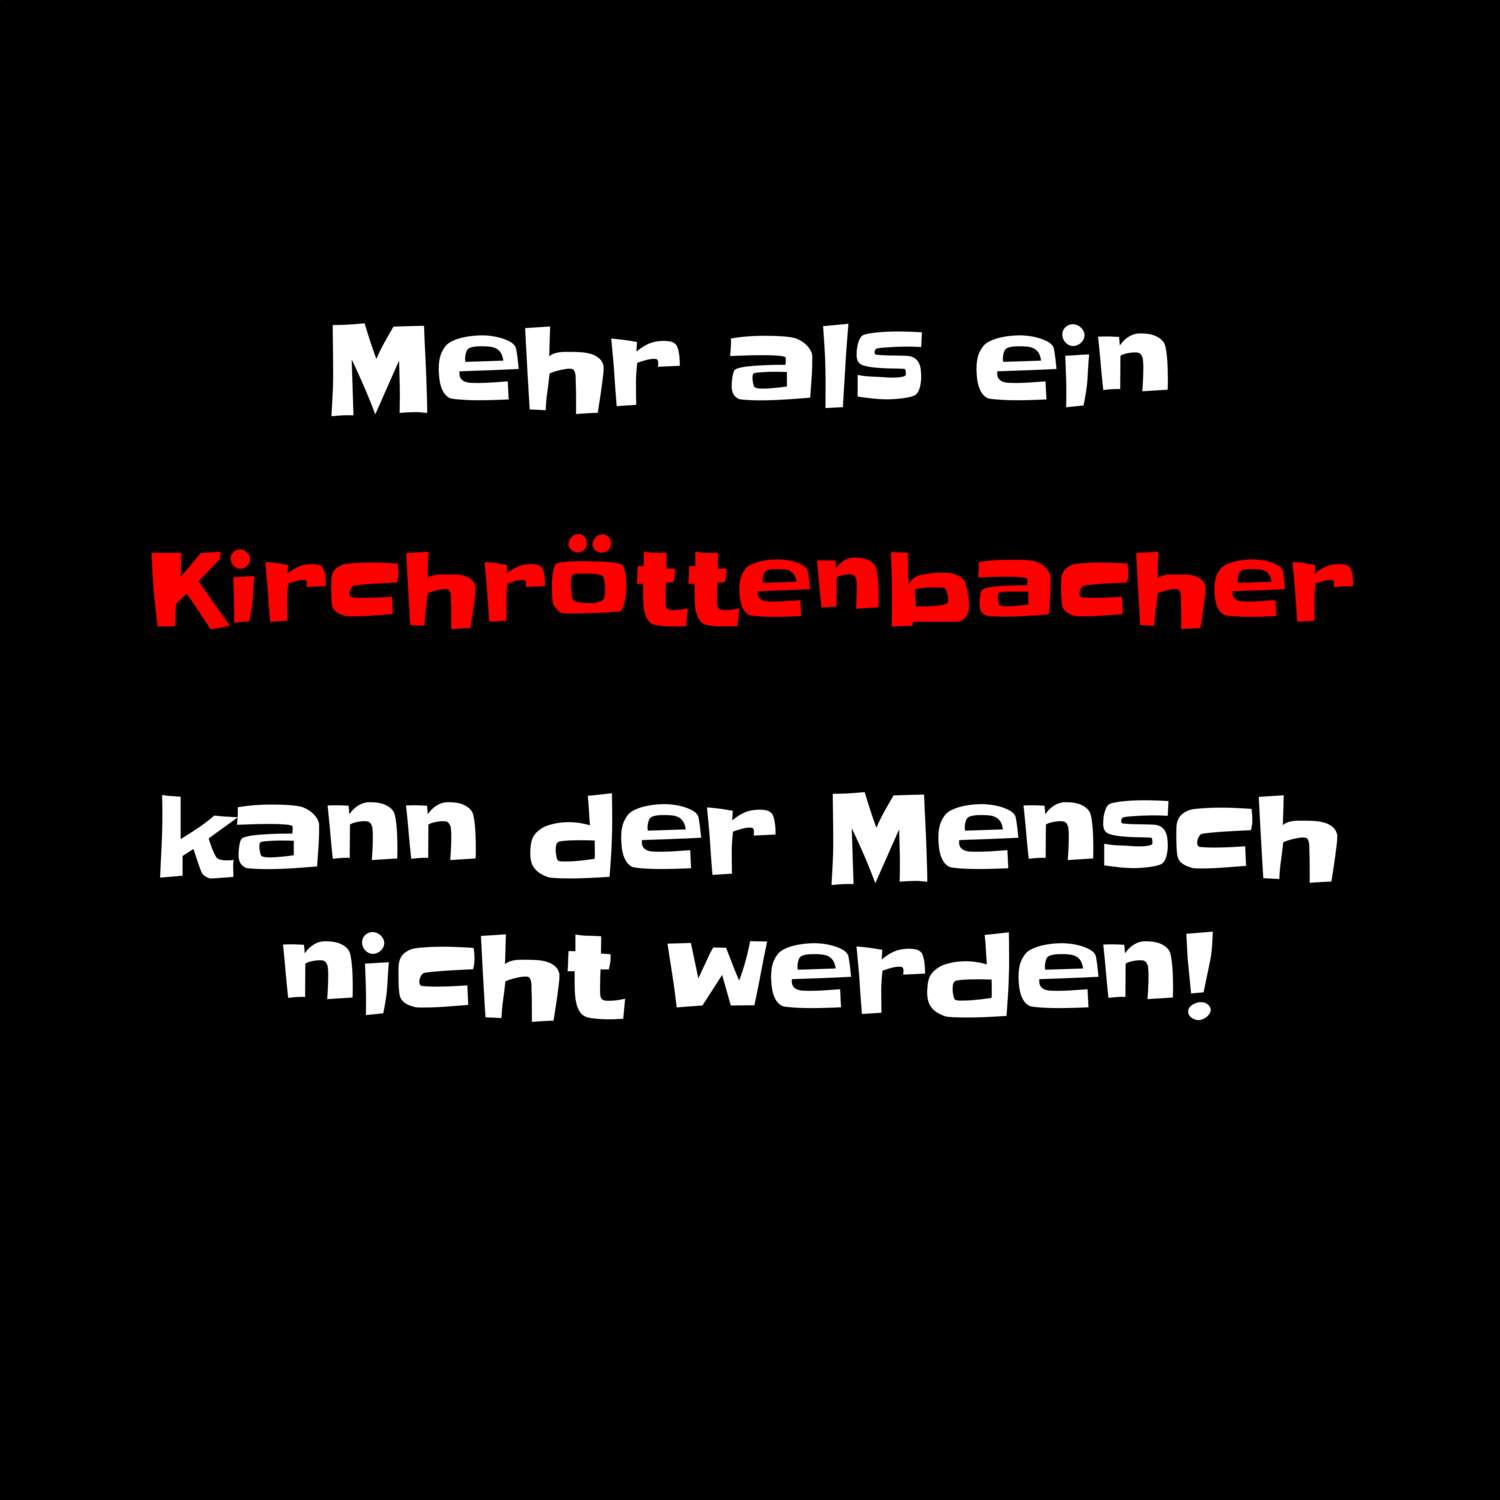 Kirchröttenbach T-Shirt »Mehr als ein«